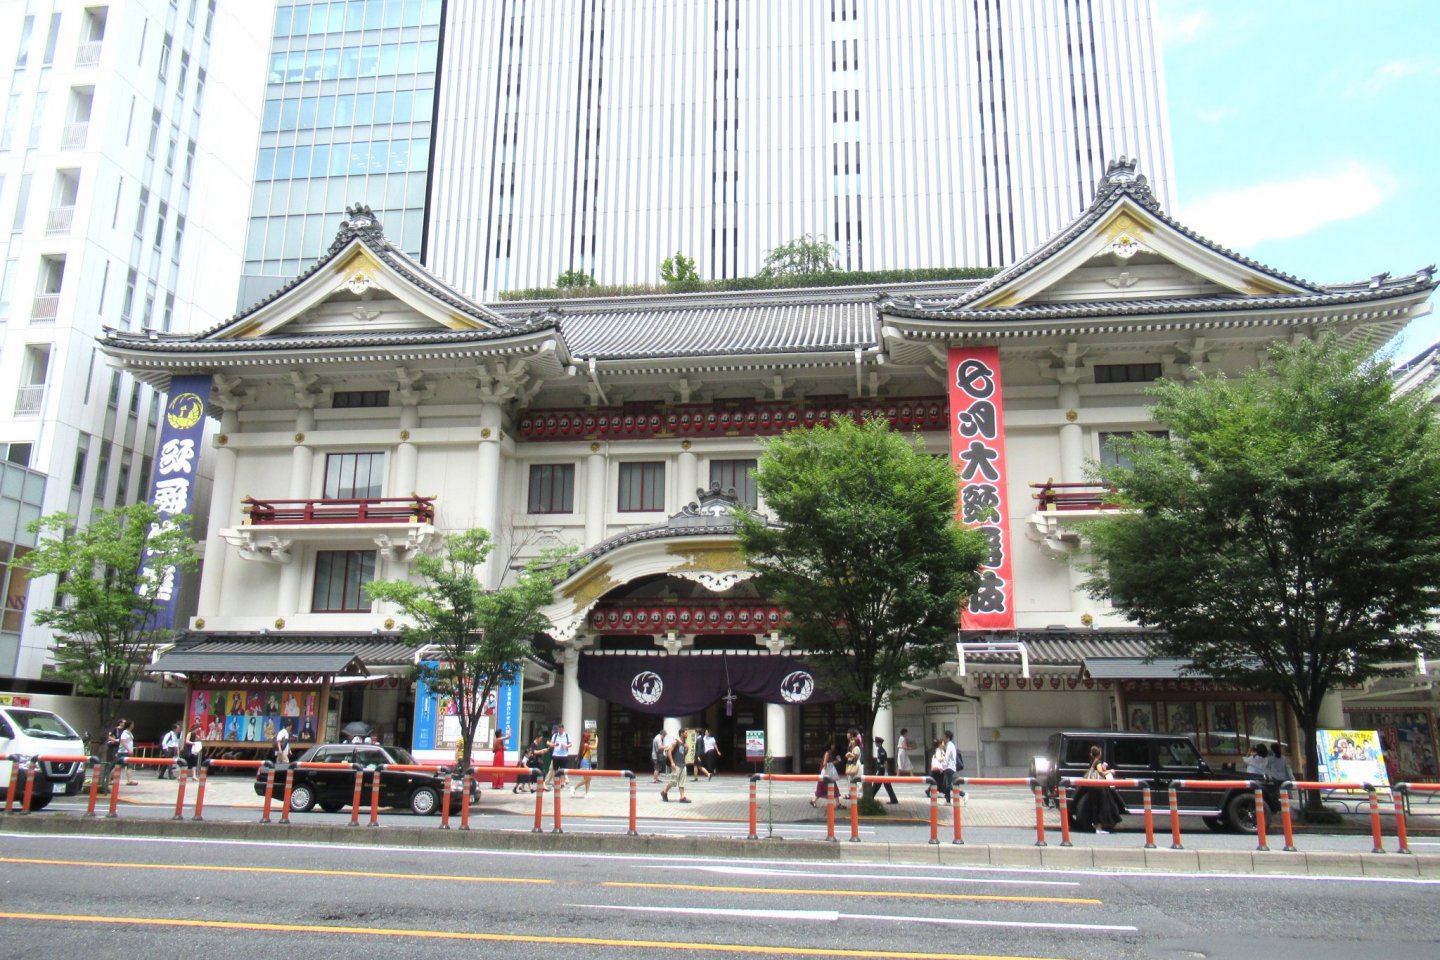 Kabukiza building